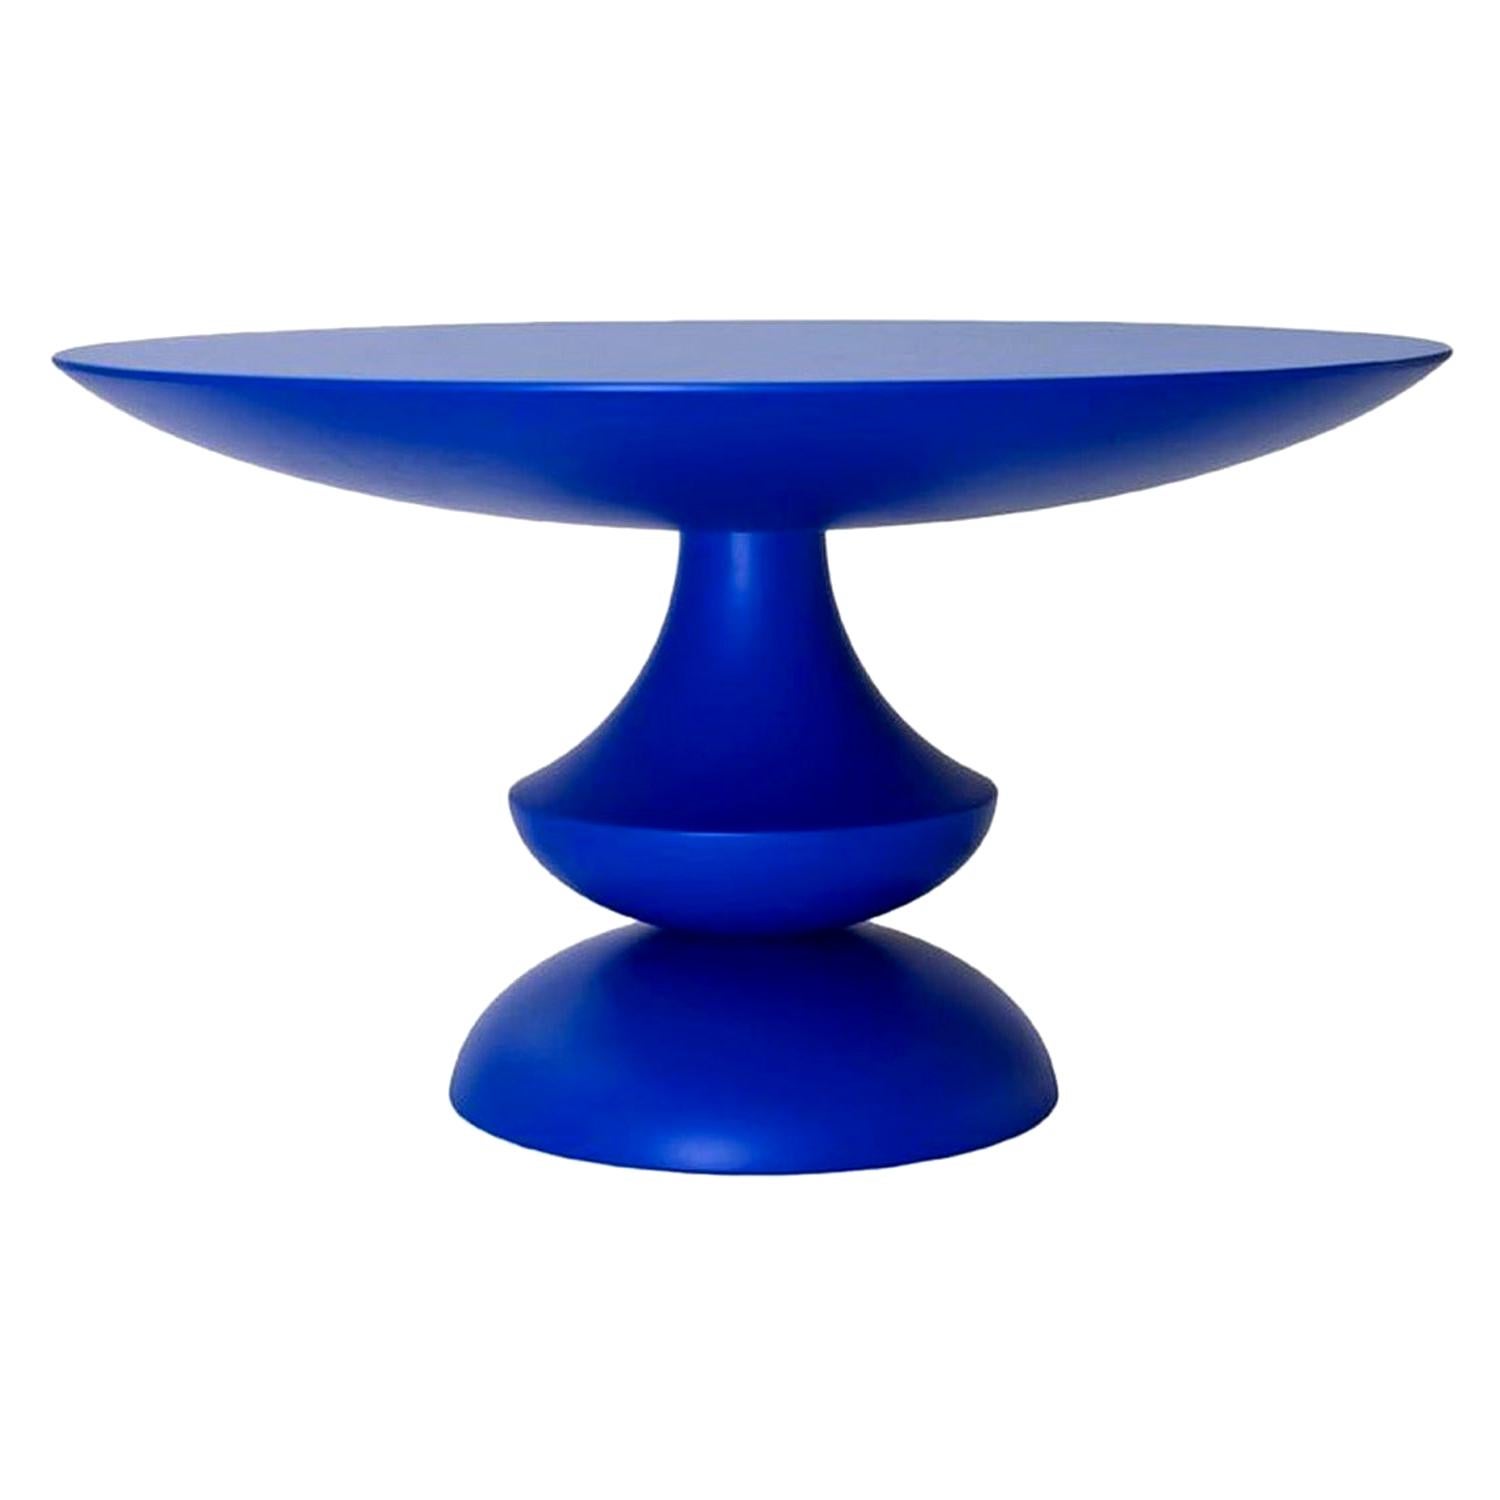 In stock in Los Angeles, Blue Lacquered Birignao Side Table by Feruccio Laviani